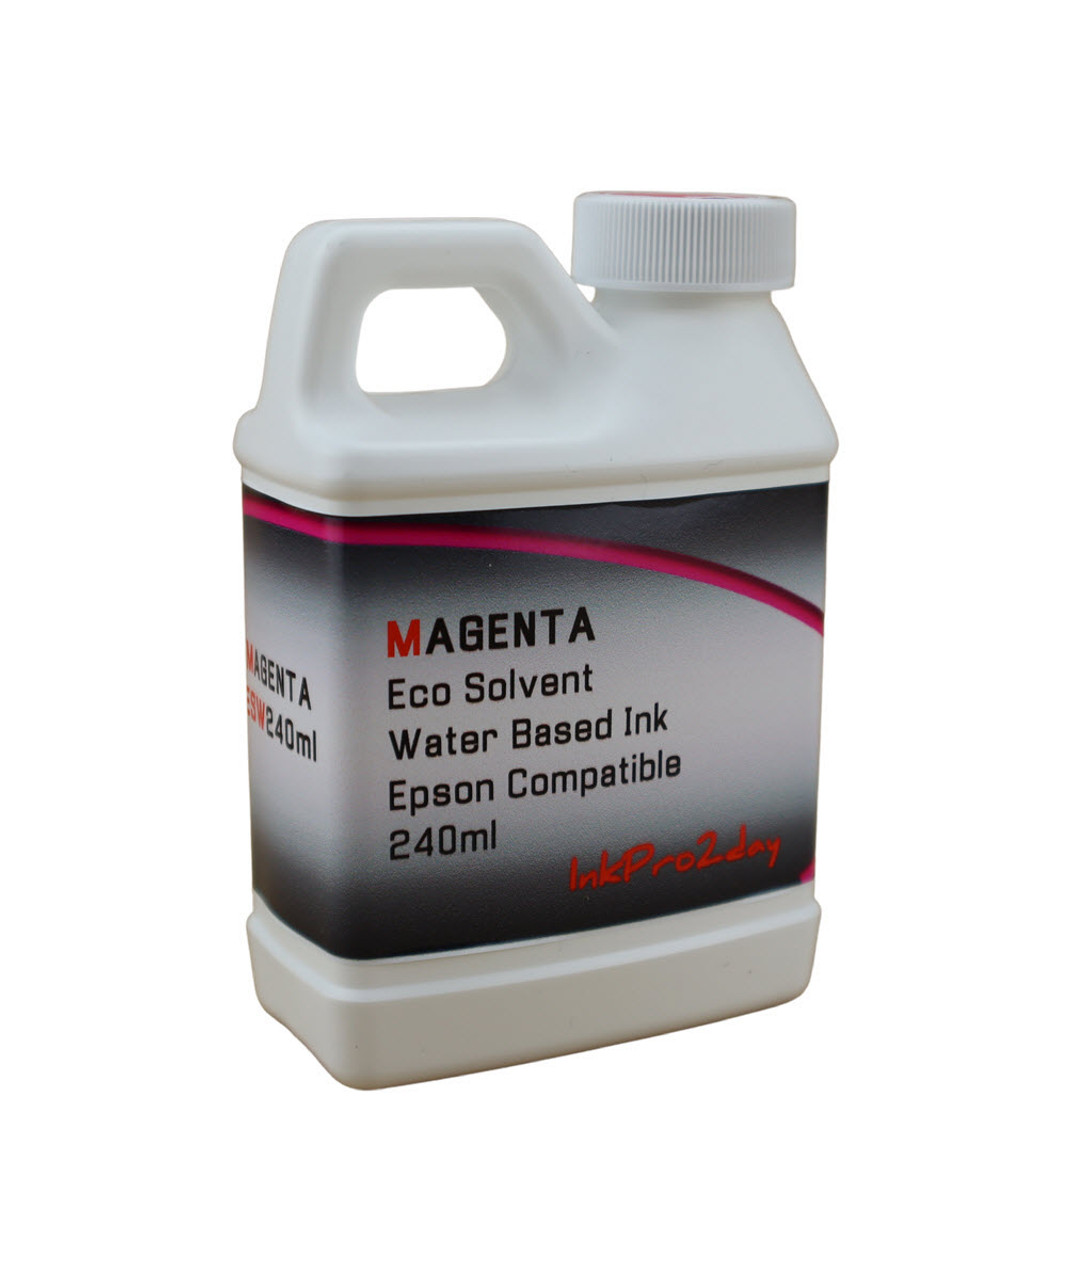 Magenta Water Based Eco Solvent Ink 240ml Bottle for Epson WorkForce WF-7110 WF-7610 WF-7620 Printers